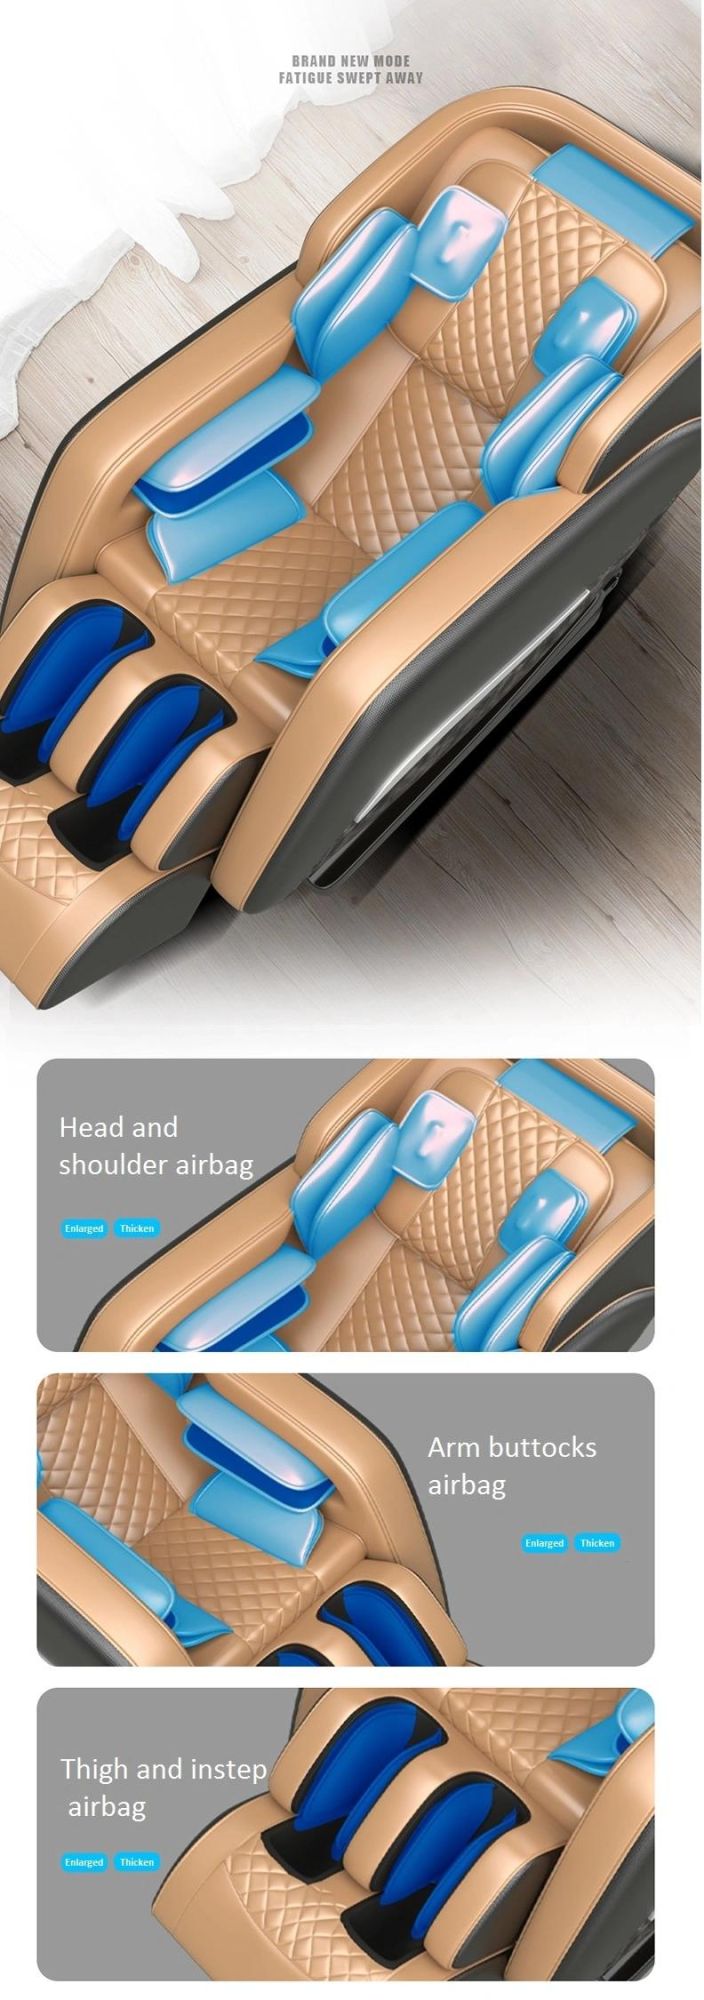 Kneading Massage with Heat Full Body Zero Gravity 4D Electric SL Track Massage Chair